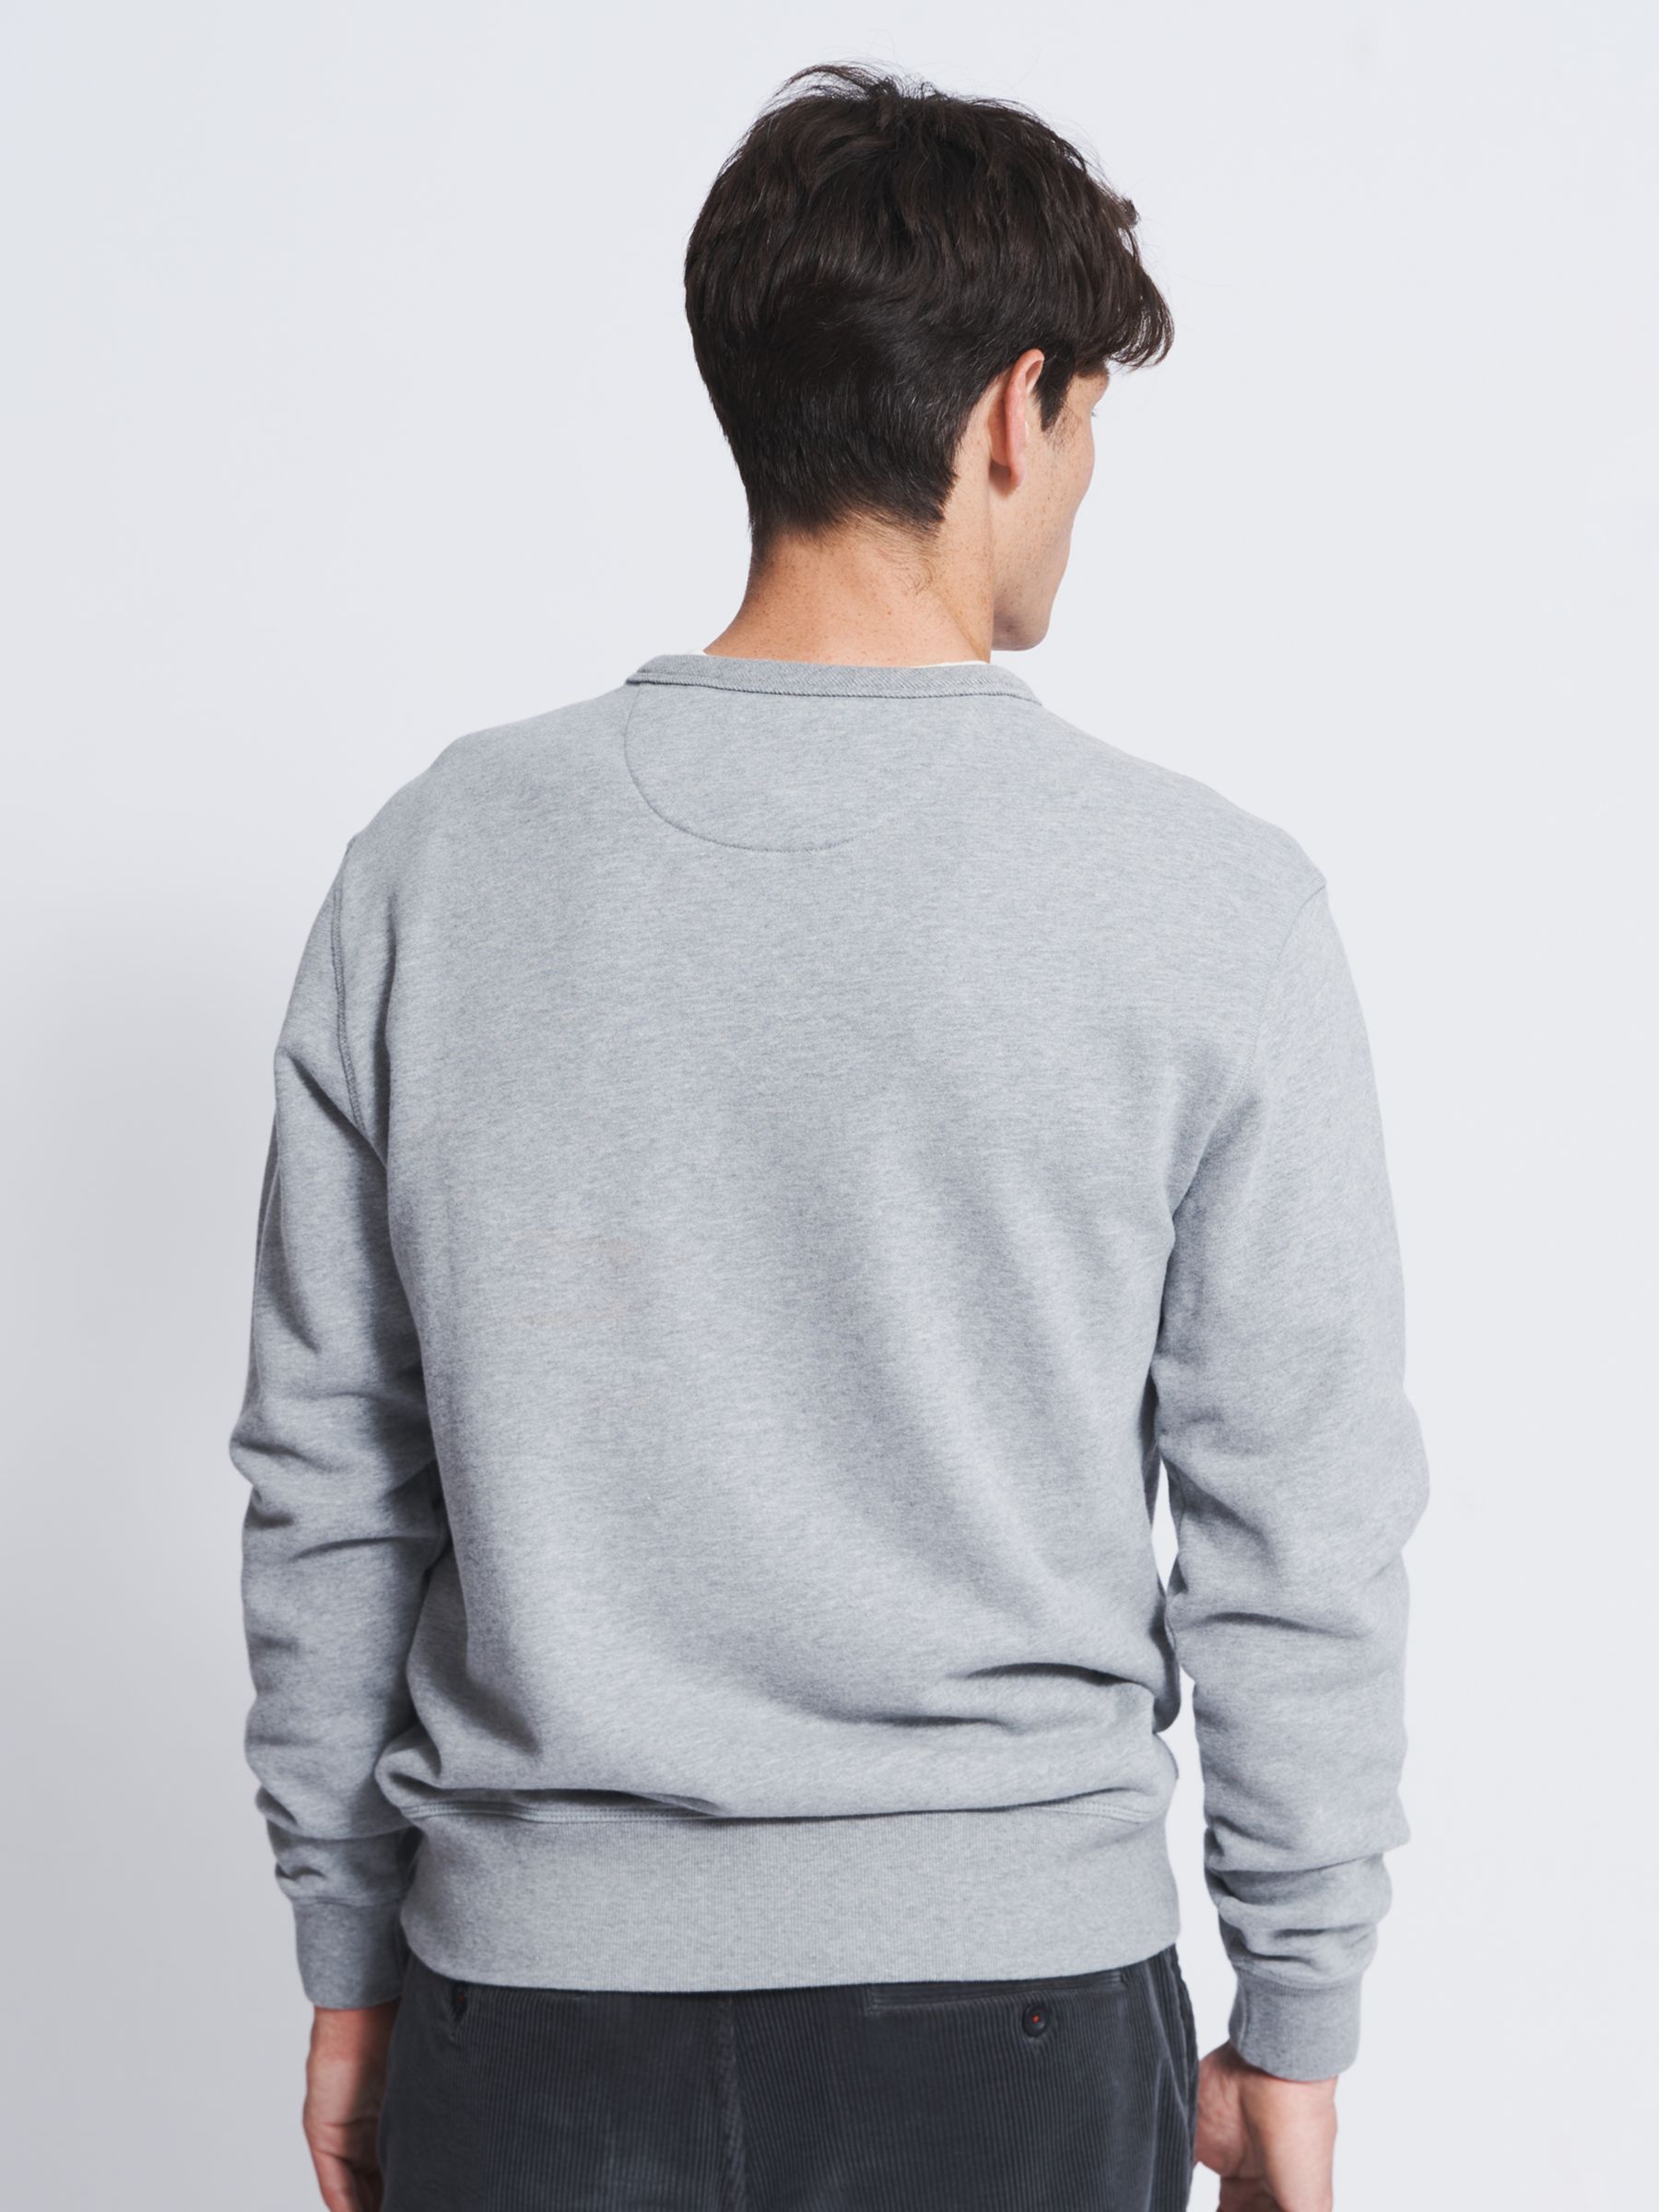 Aubin Vestry Crew Neck Cotton Sweatshirt, Grey Marl, XS